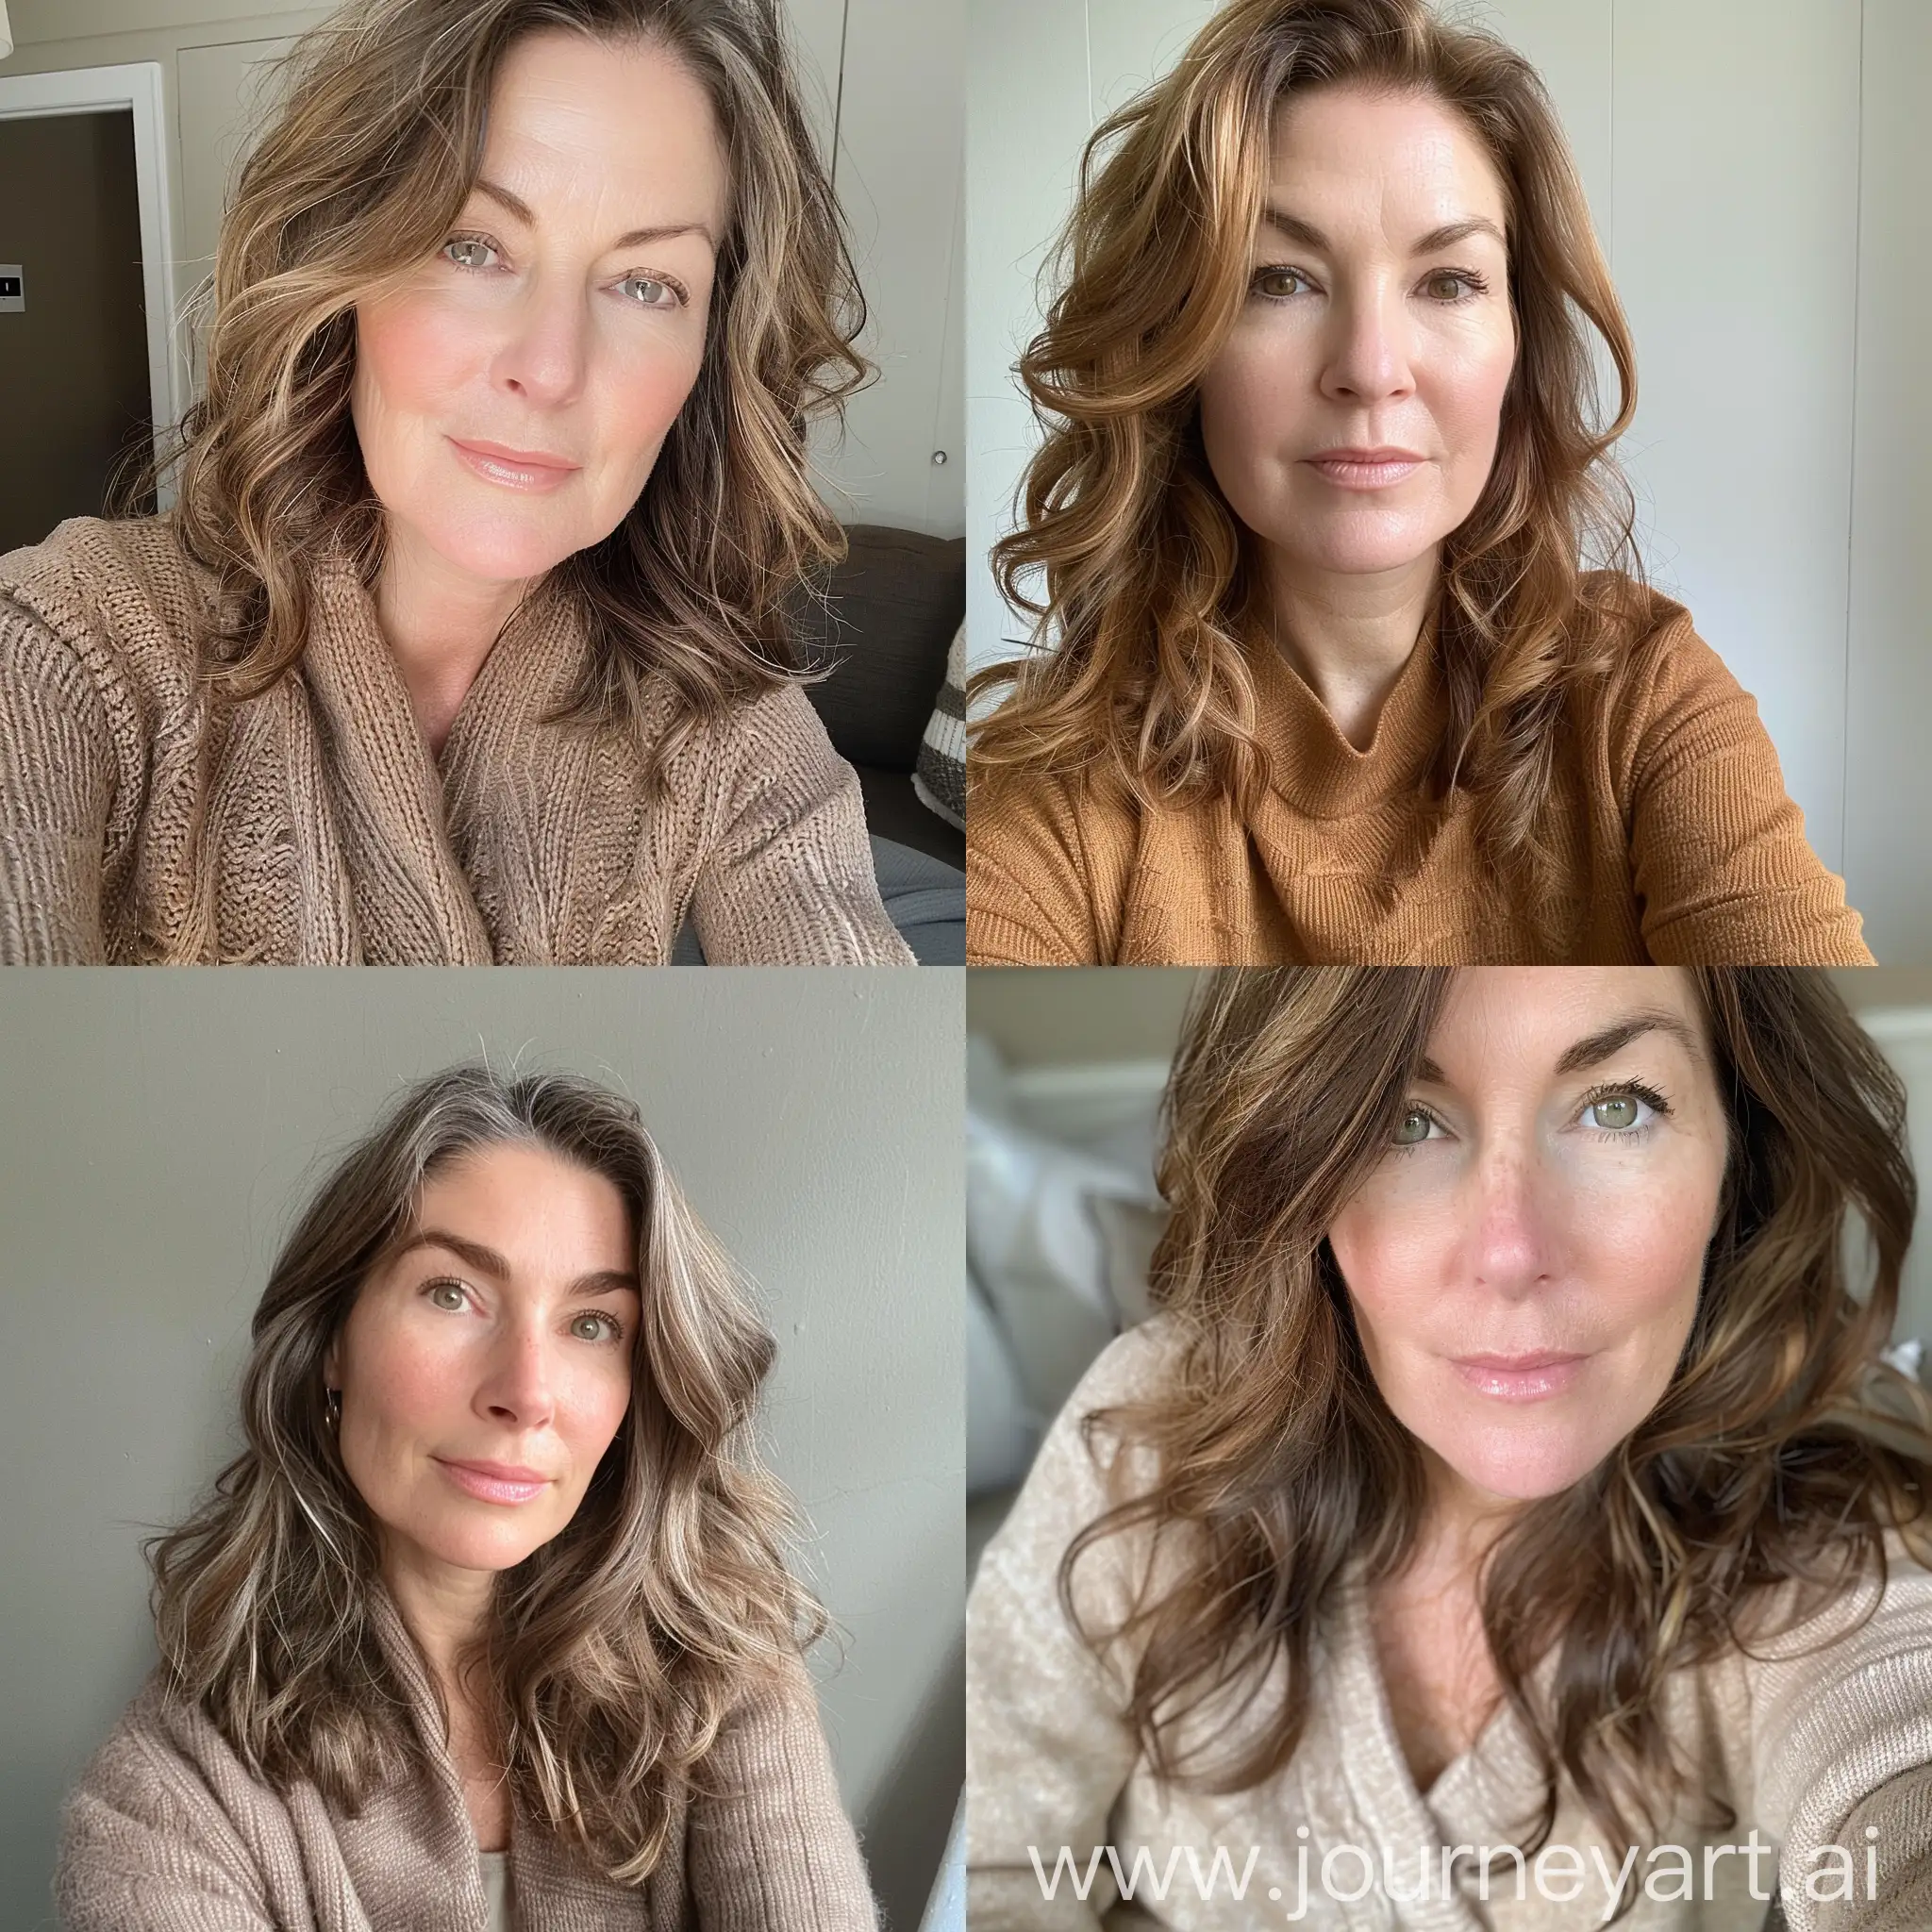 Aesthetic instagram selfie of a Middle School teacher, super model face, woman, mid 40's, soft brown clothing color tones--ar 9:16